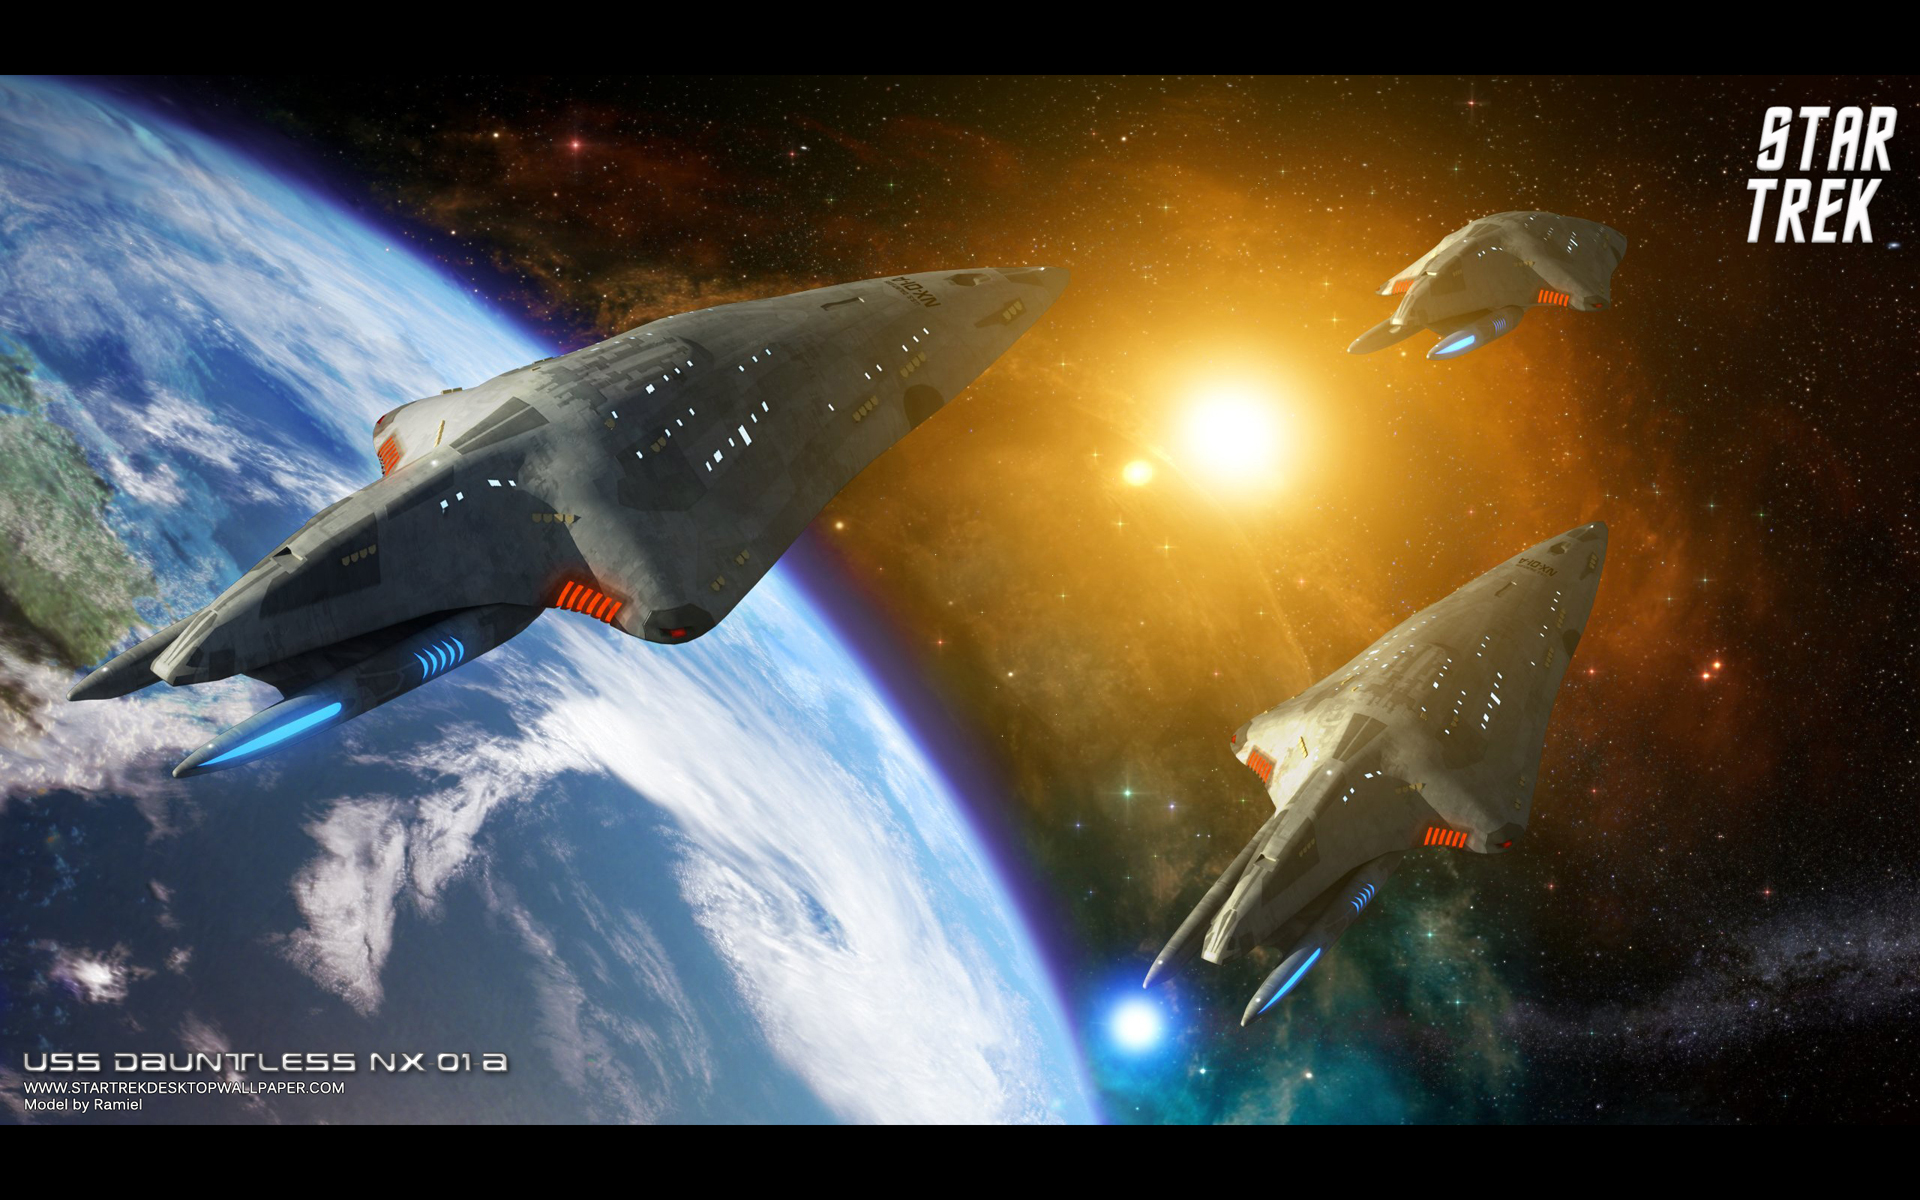 - Star Trek USS Dauntless NX-01-A - free Star Trek computer desktop wallpaper, pictures, images.